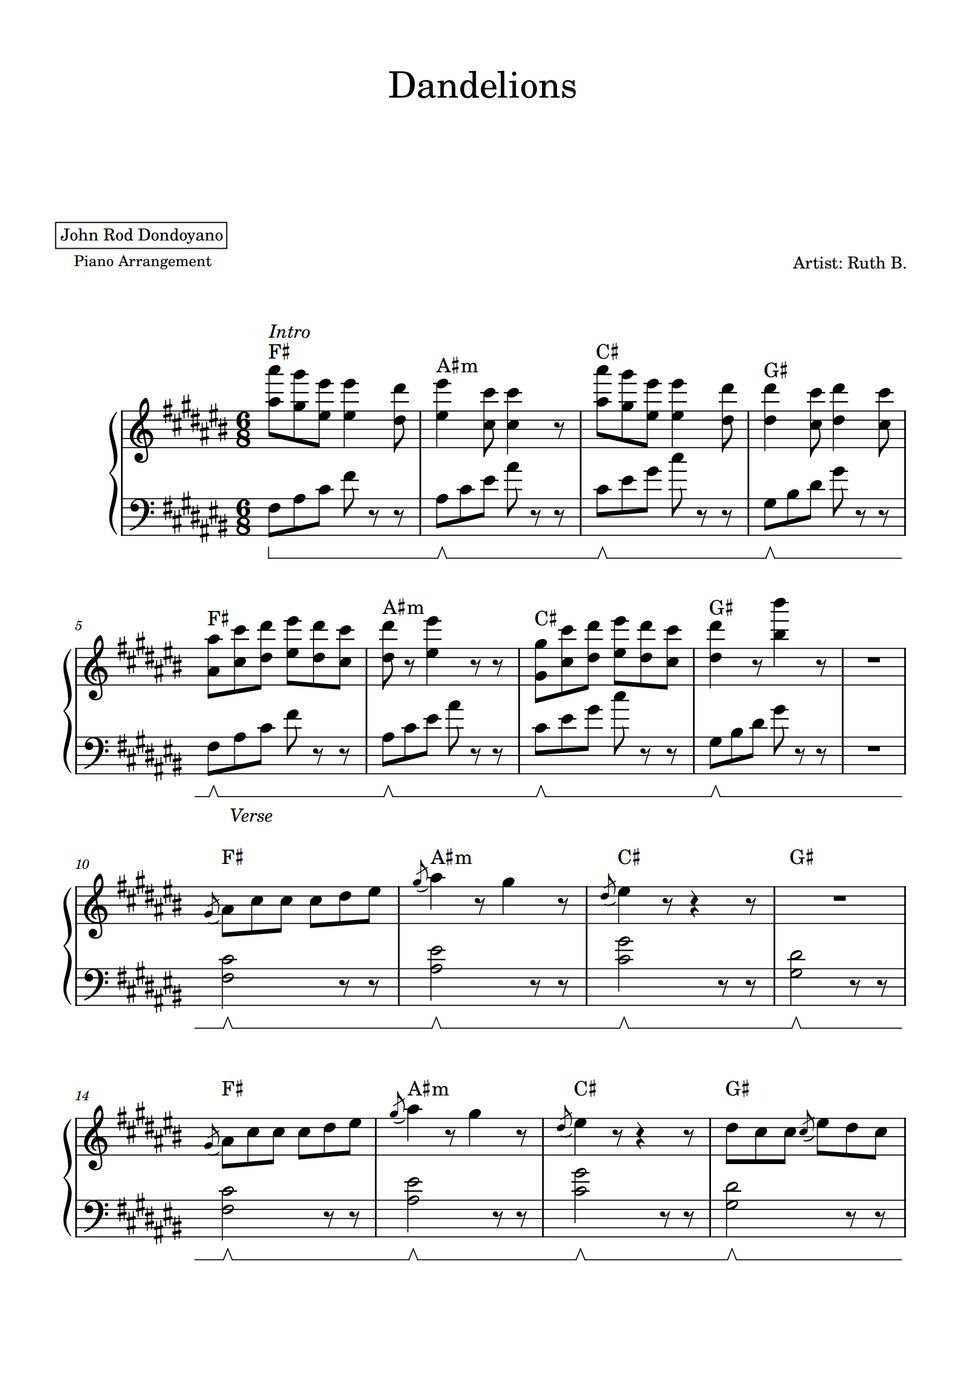 Ruth B Dandelions Piano Sheet शीट By John Rod Dondoyano 